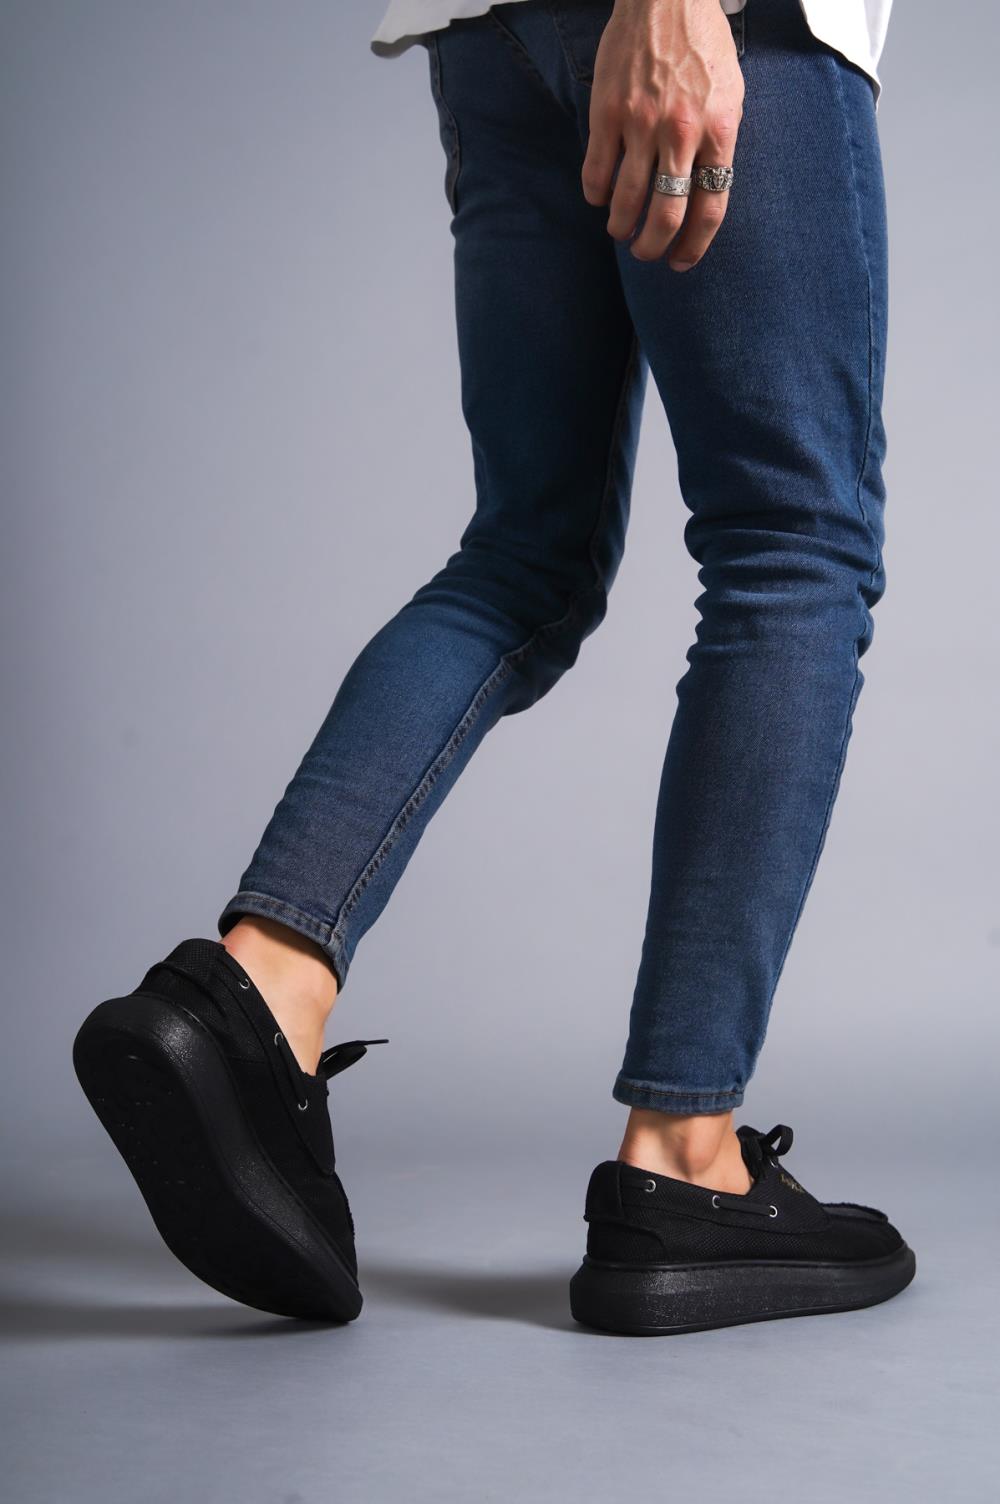 Men's High-Sole Seasonal Linen Shoes 009 Black (Black Sole) - STREETMODE™